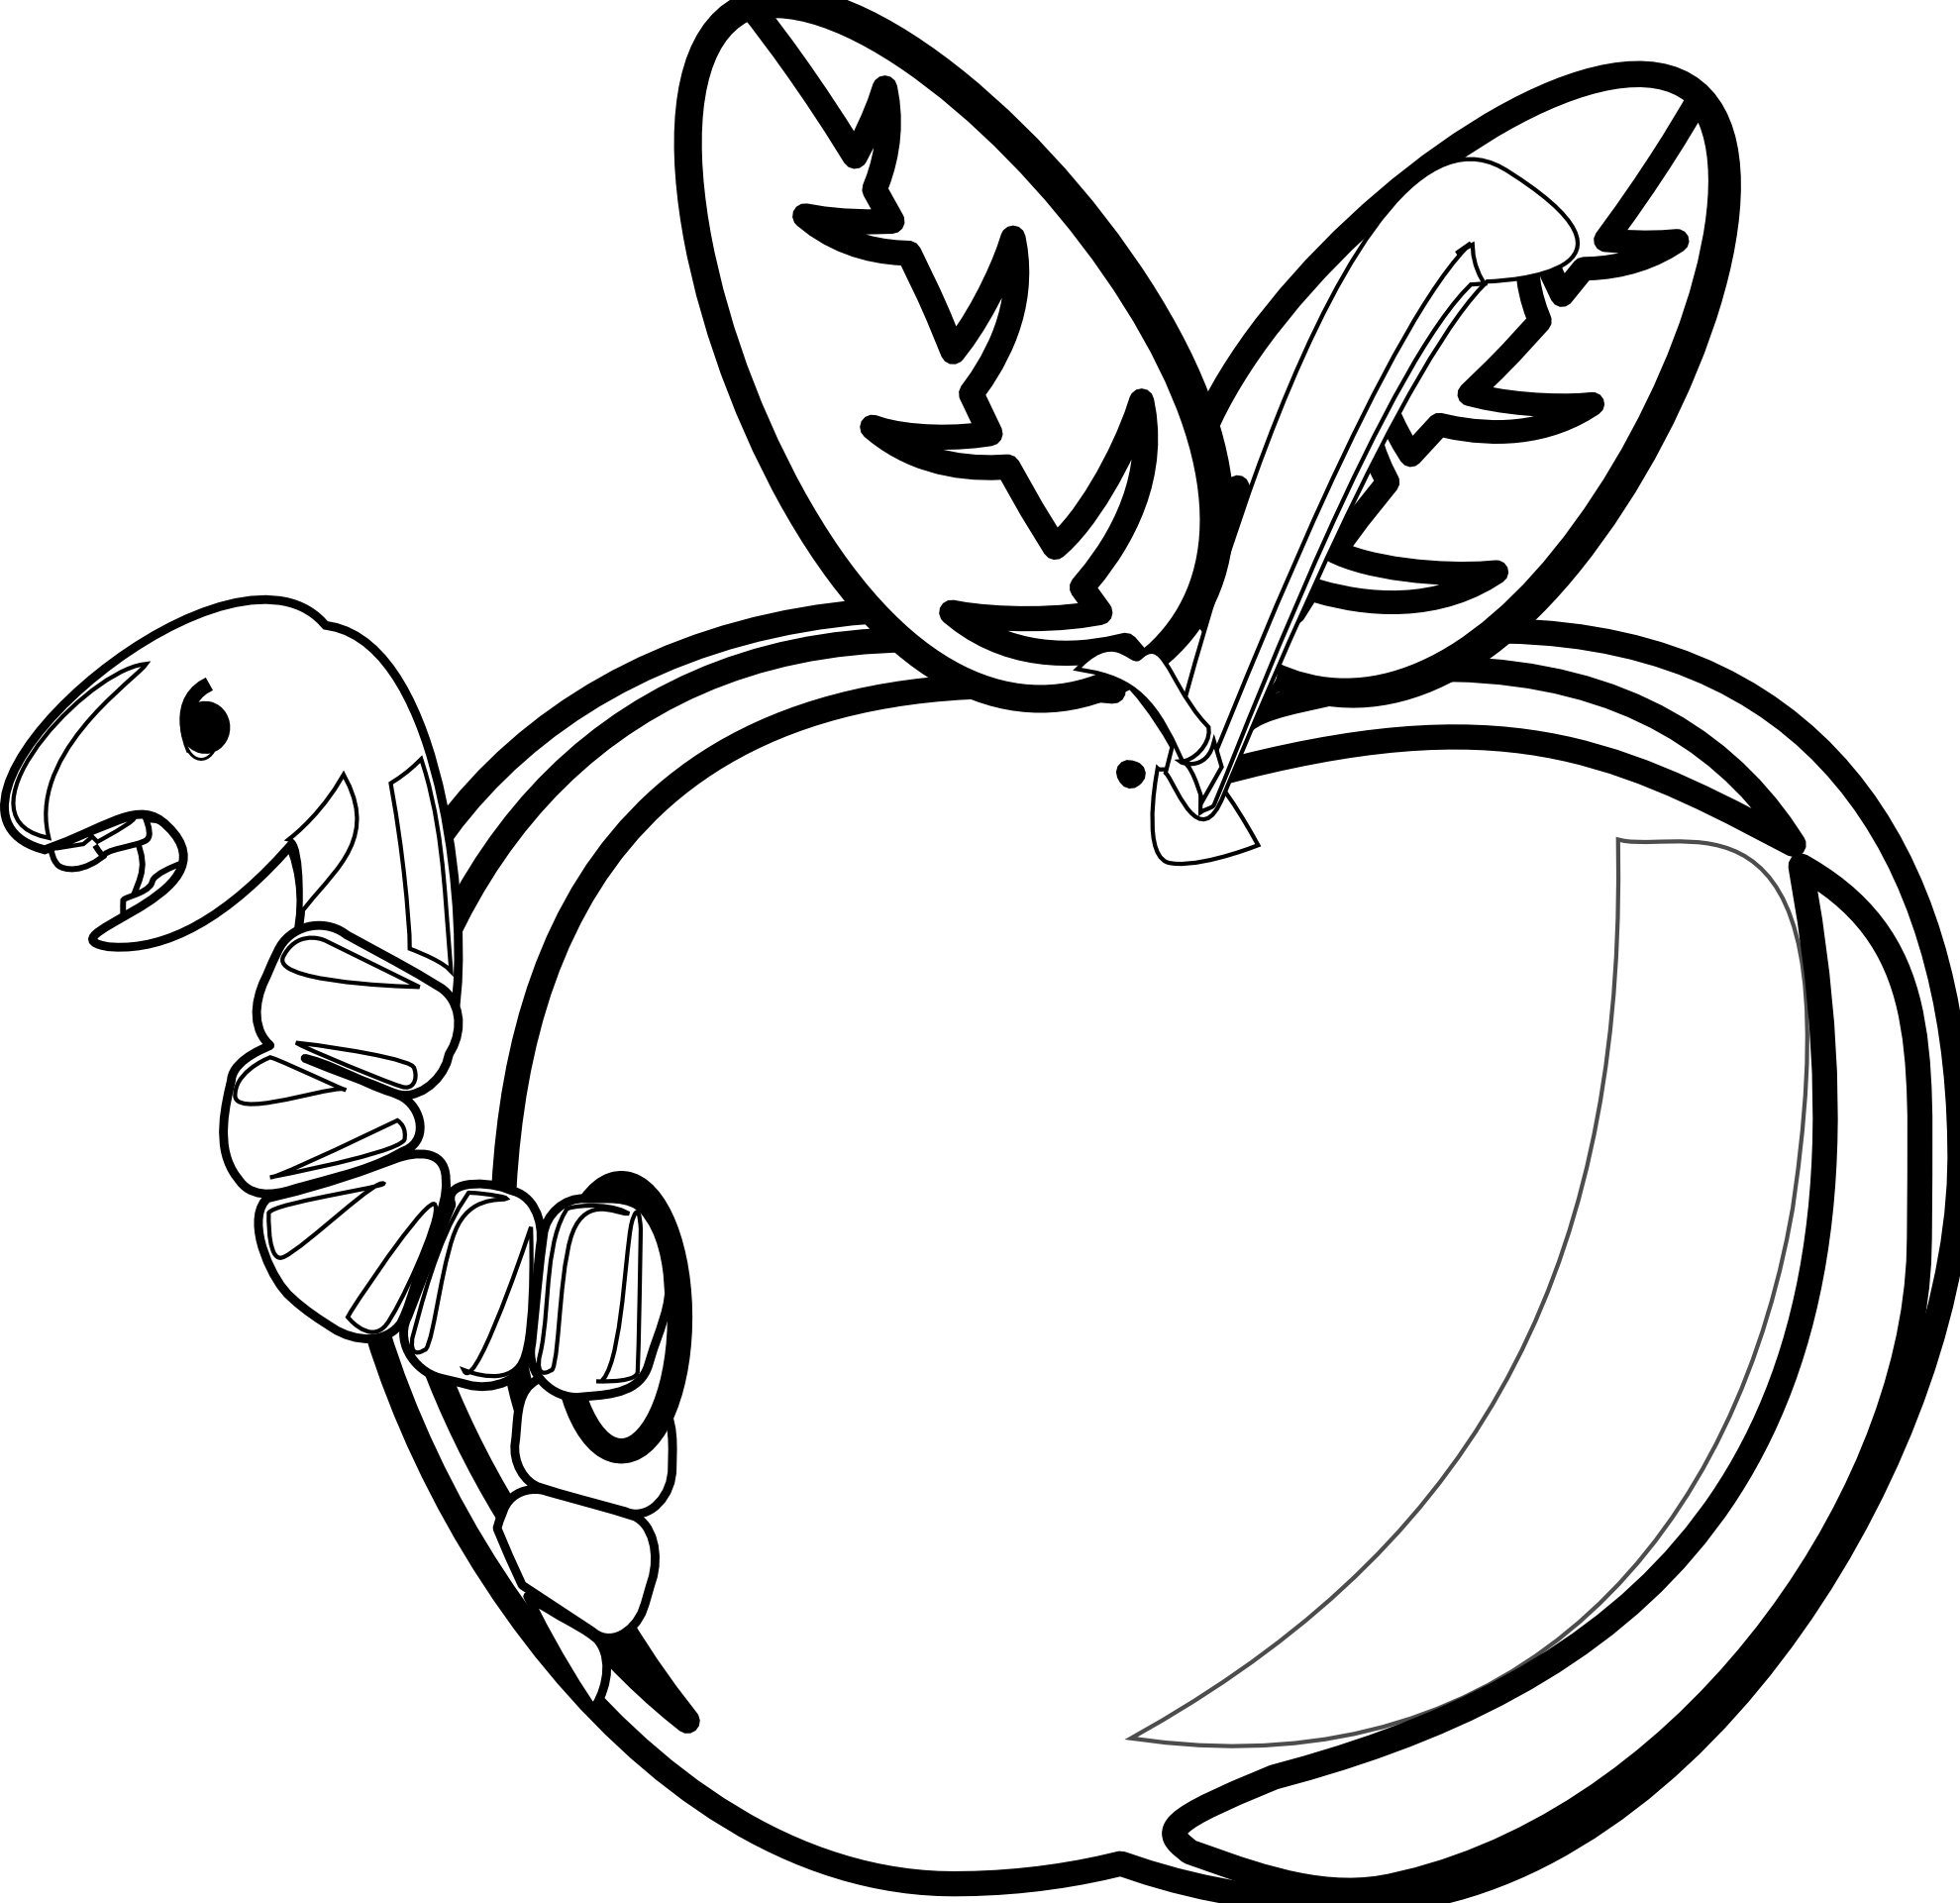 rg 1 24 cartoon apple with worm black white line ... 